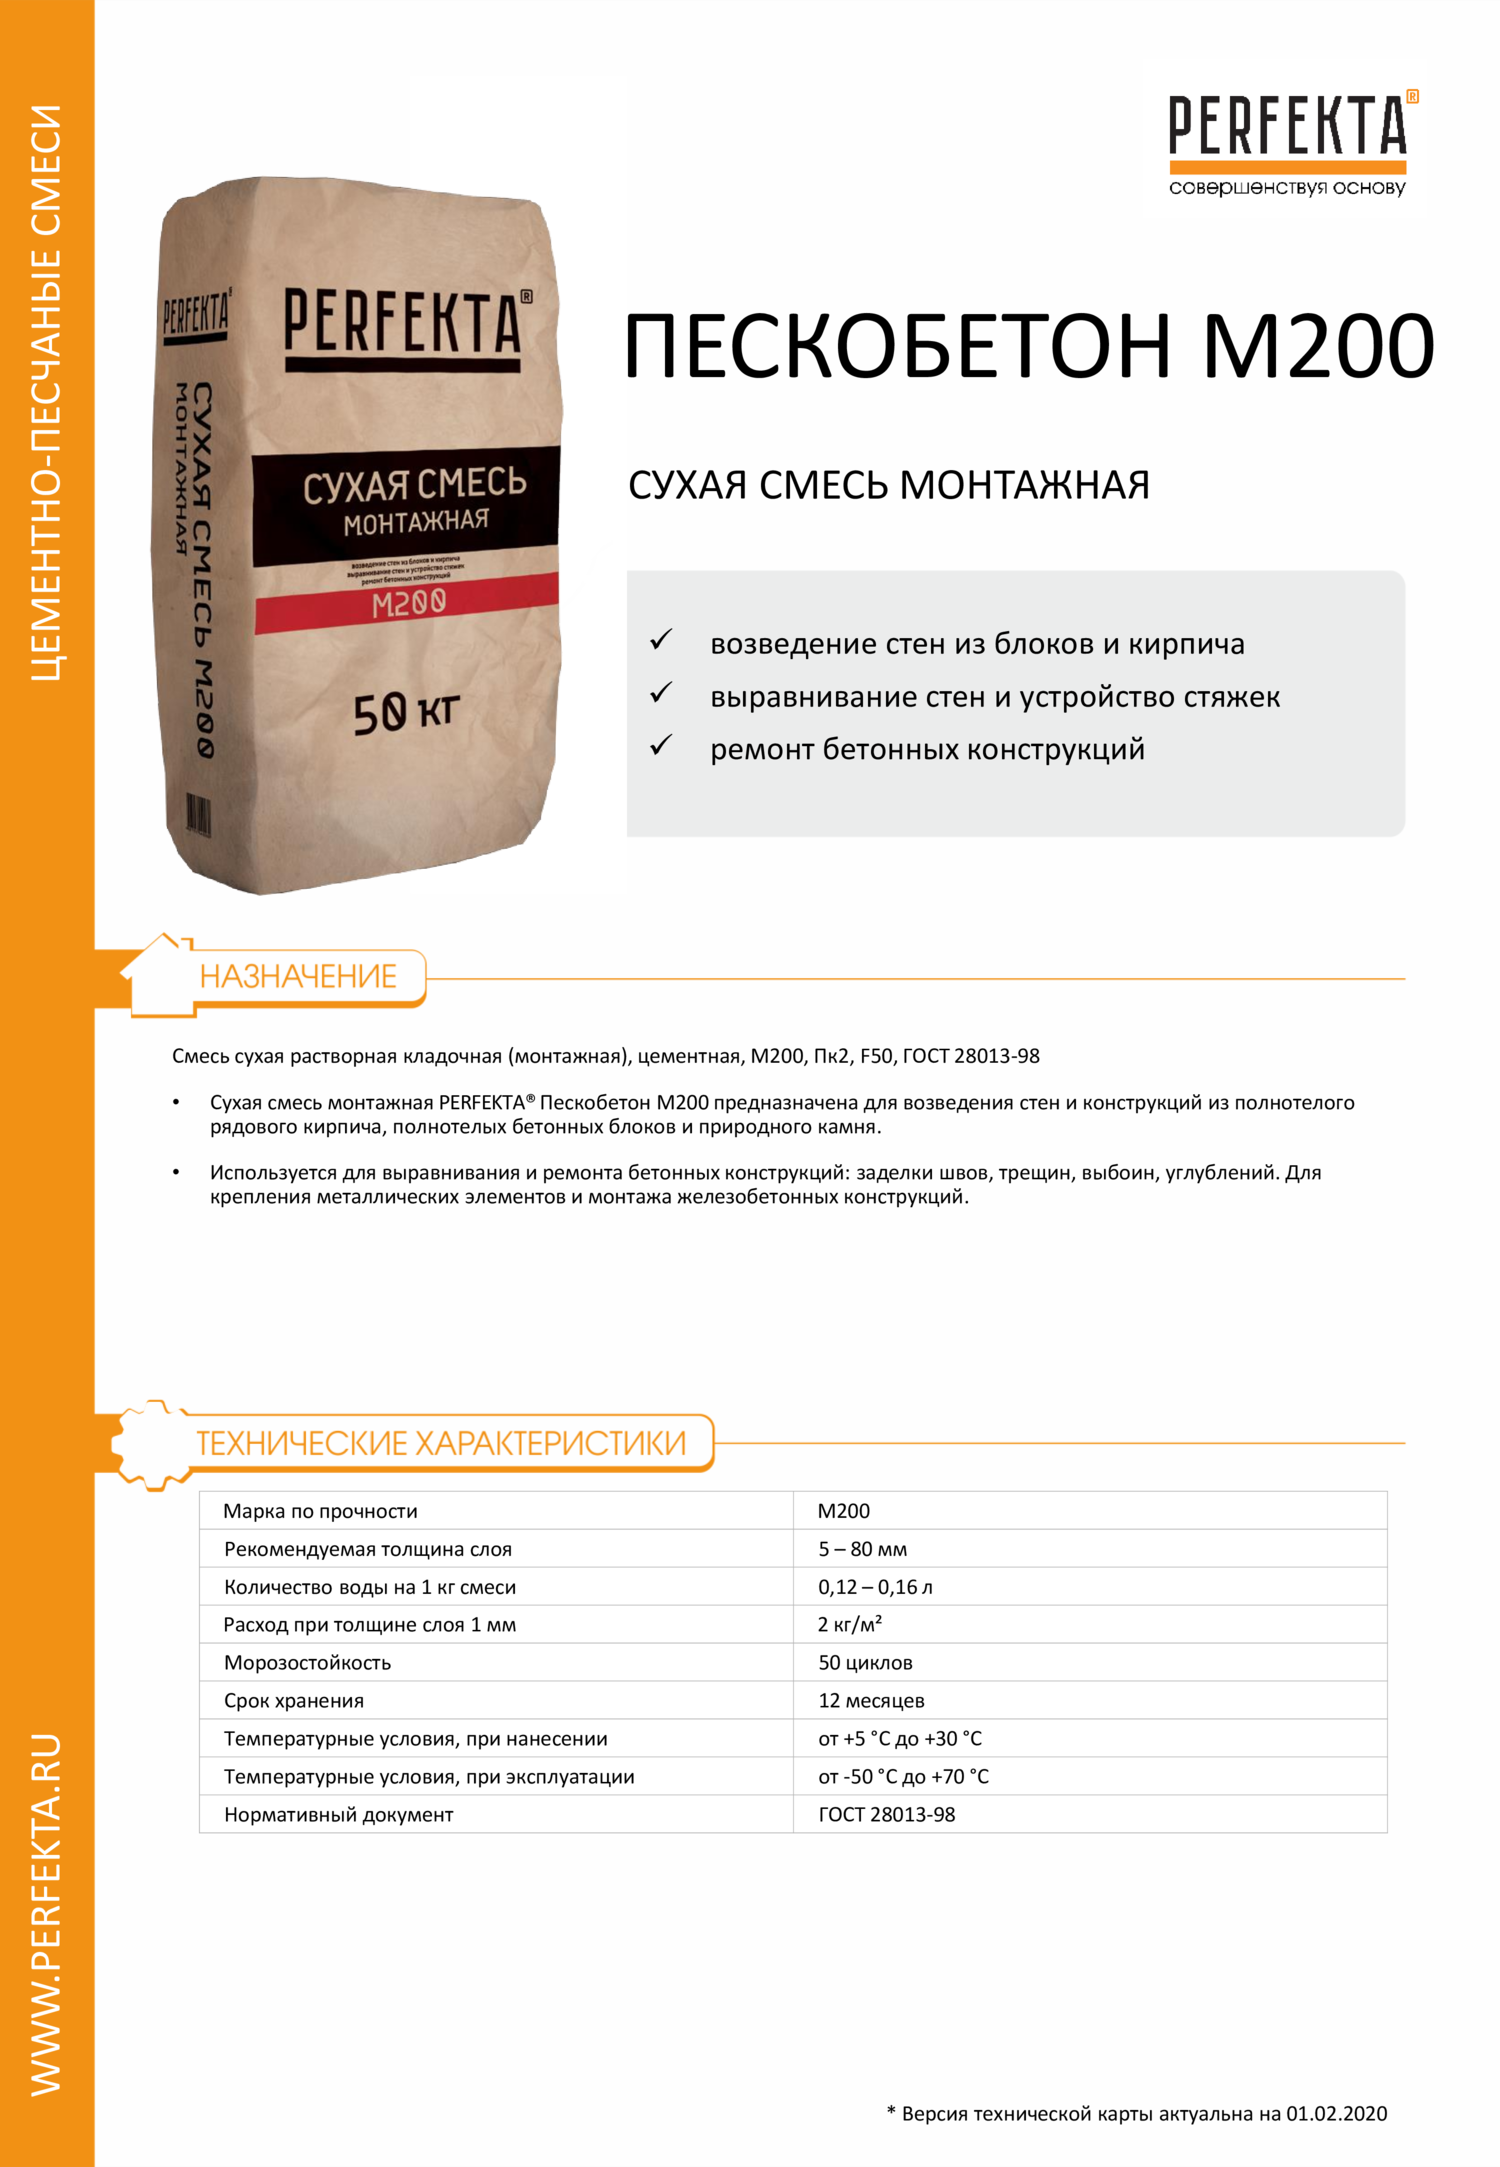 Пескобетон м300 (м 300): состав, расход, характеристики